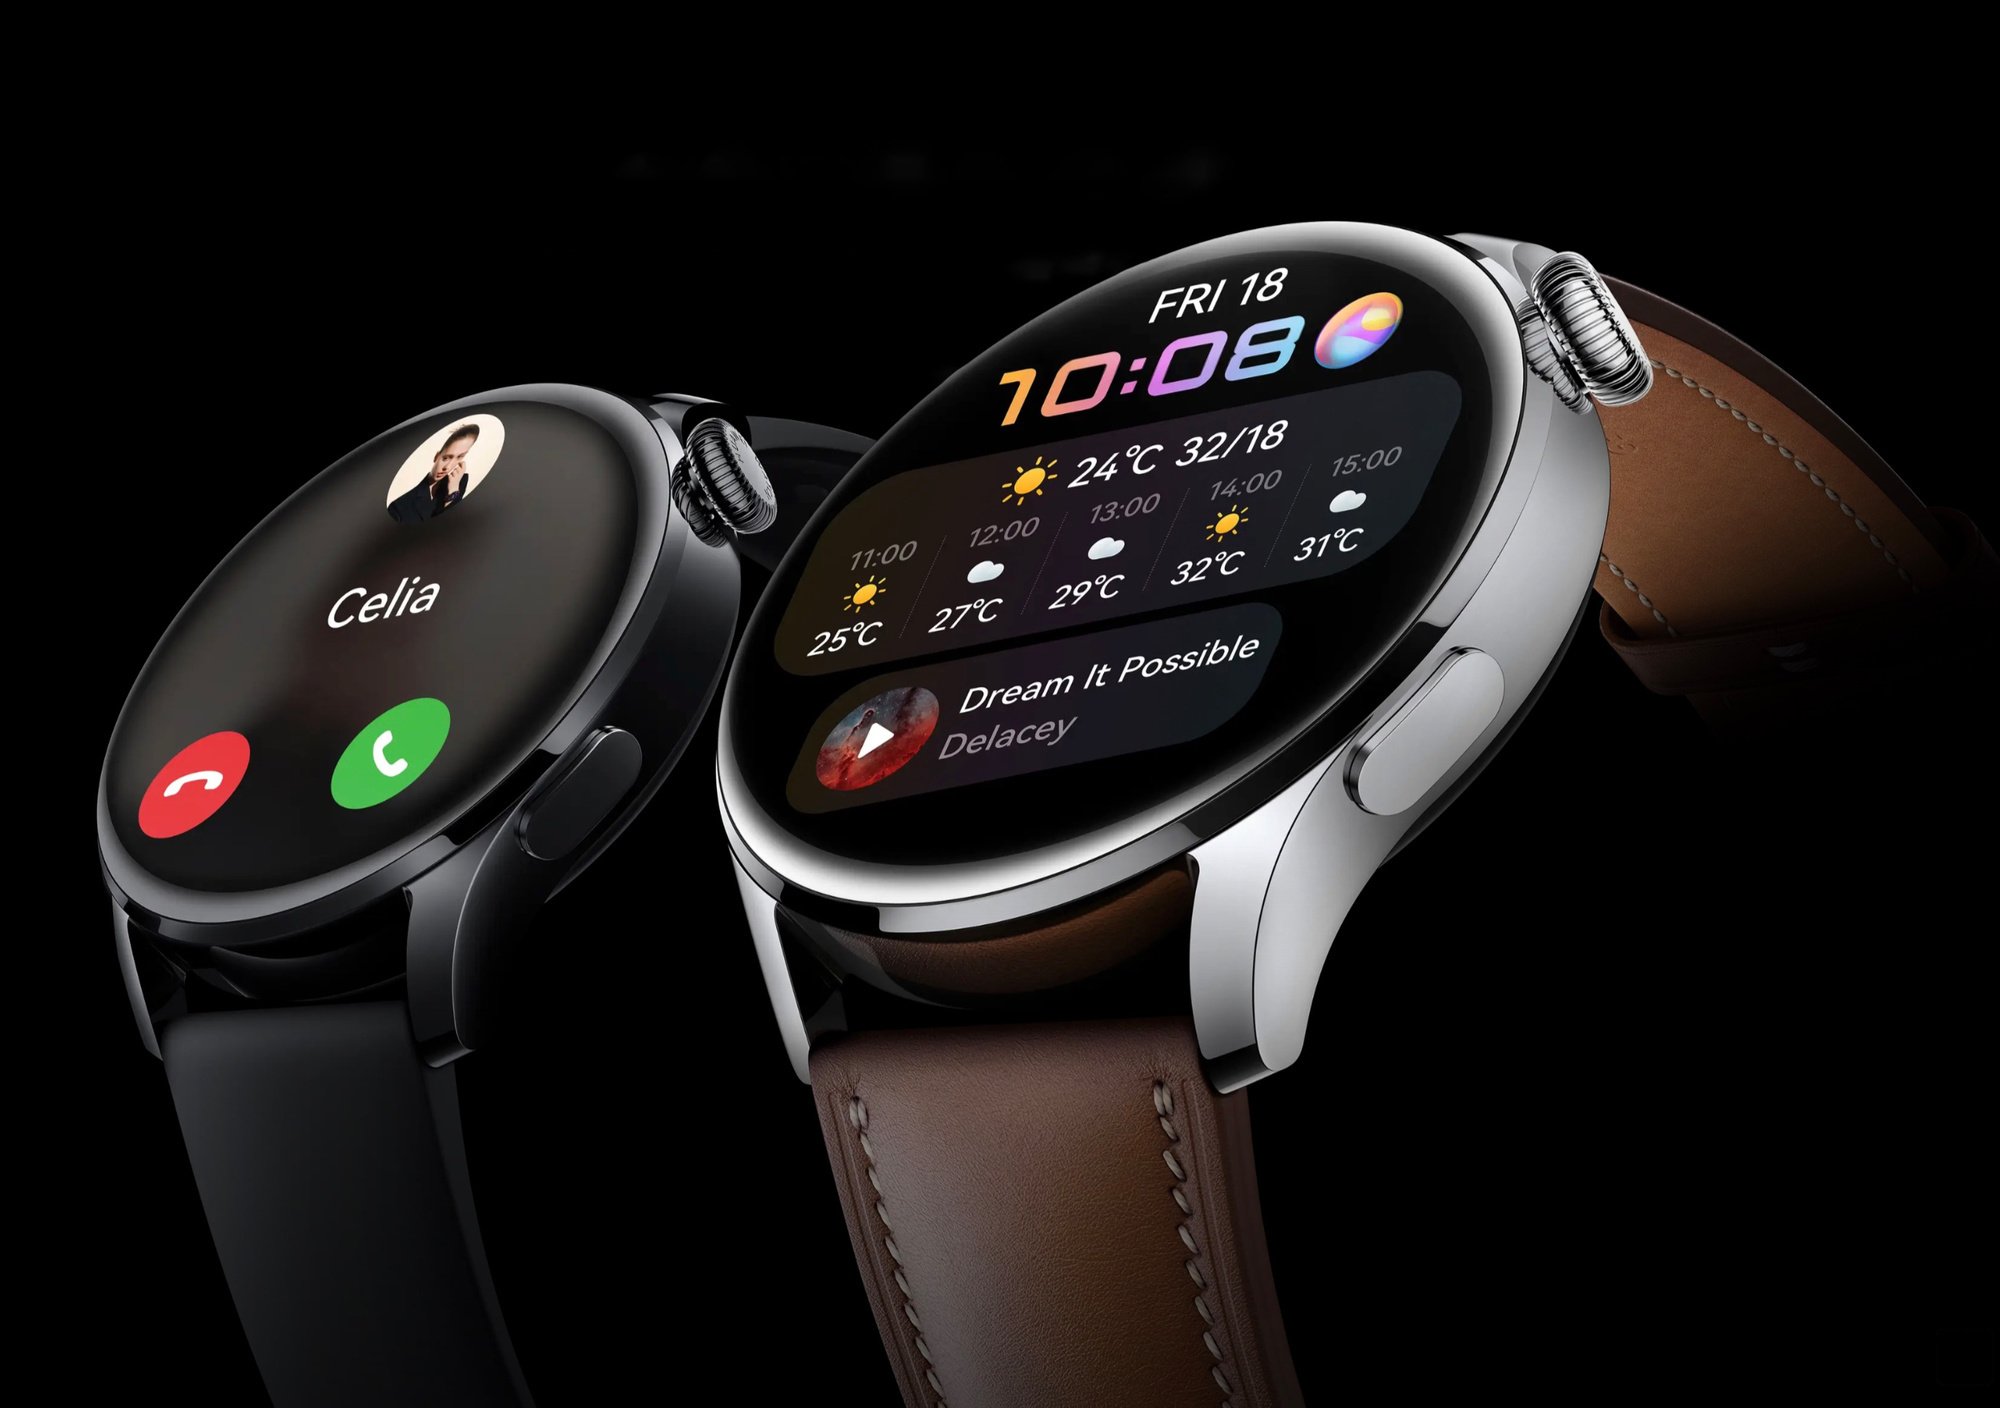 Moederland het internet gelei Hands-on: Huawei onthult nieuwe smartwatch met HarmonyOS en eSIM - Nieuws -  Data News